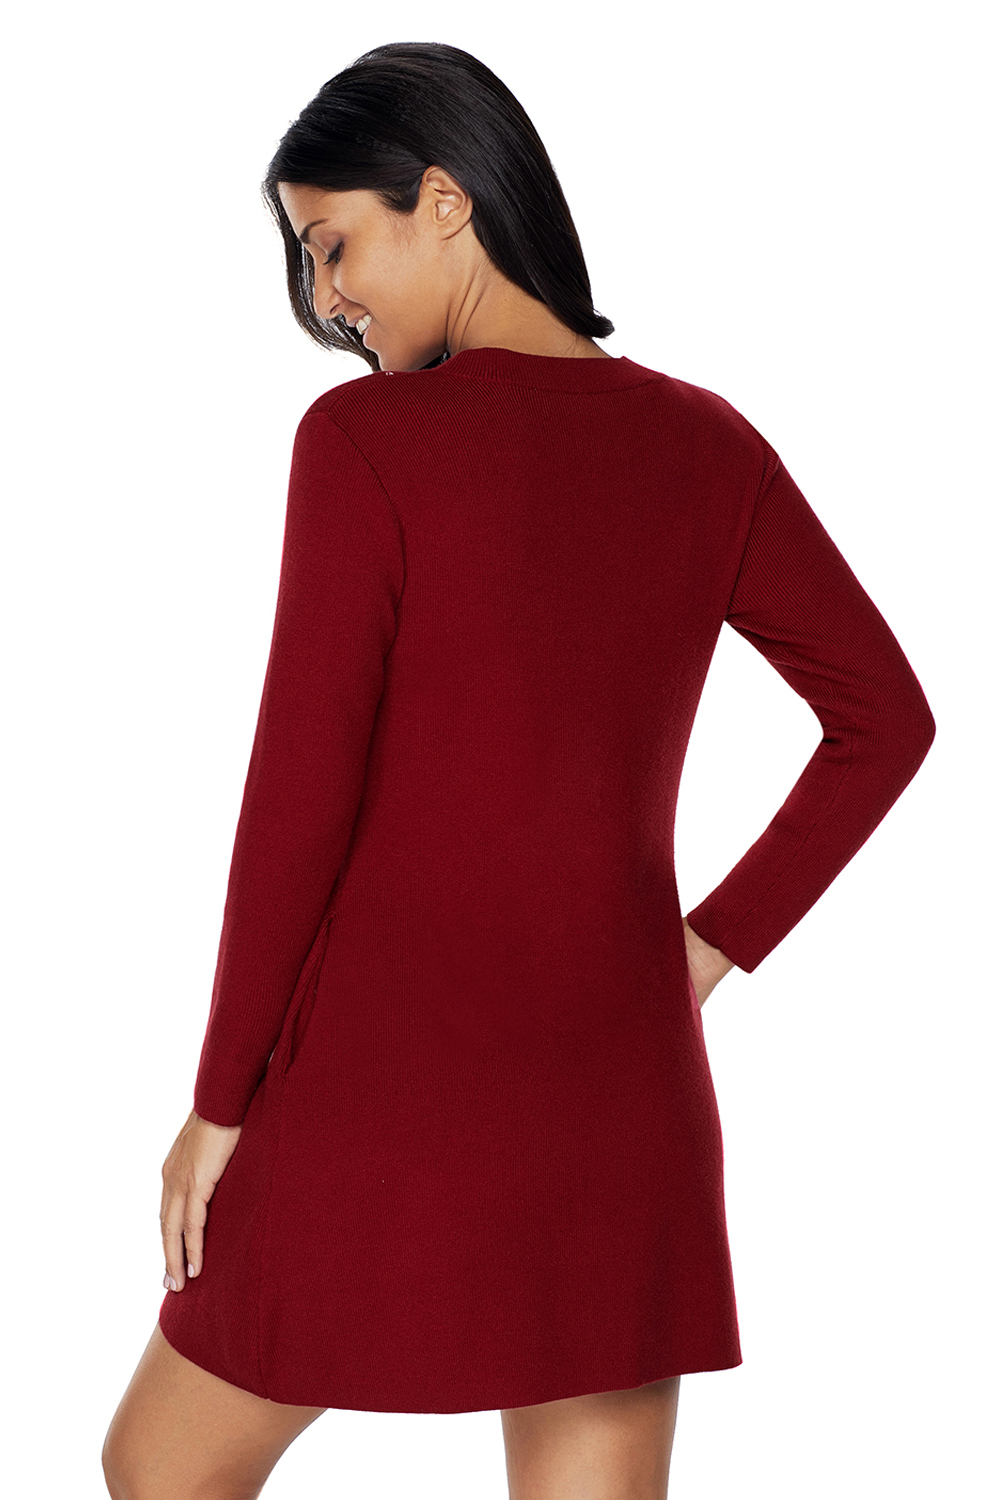 BY27712-3 Wine High Neck Long Sleeve Knit Sweater Dress